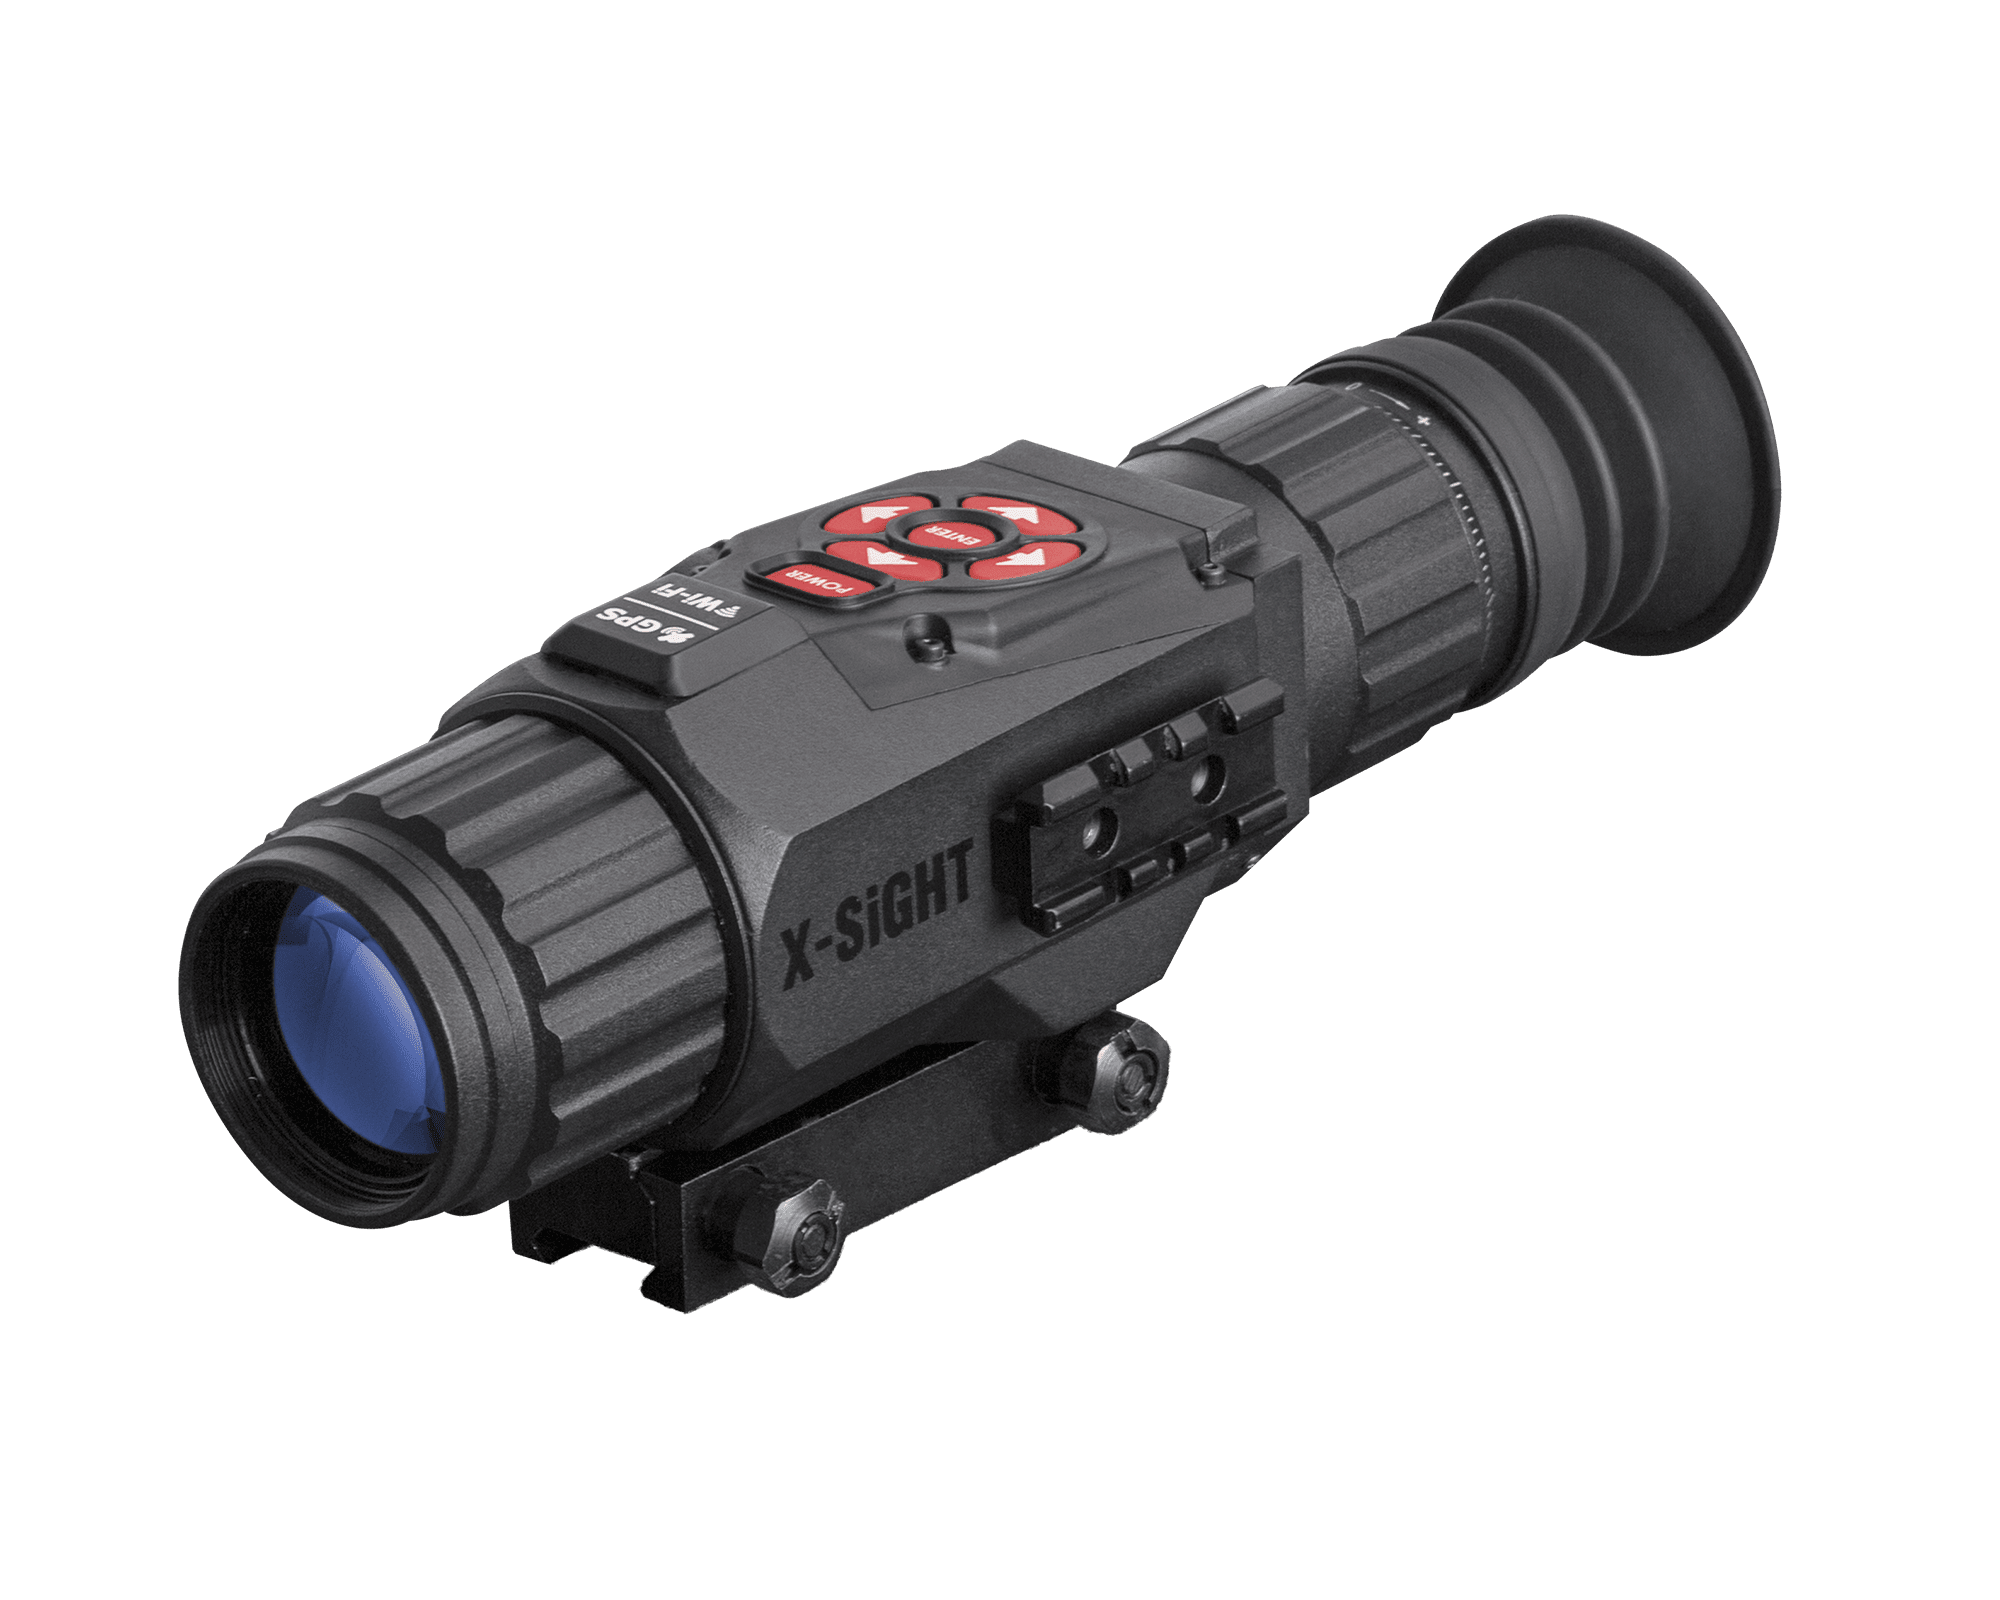 x sight 3 12x day night hunting rifle scope